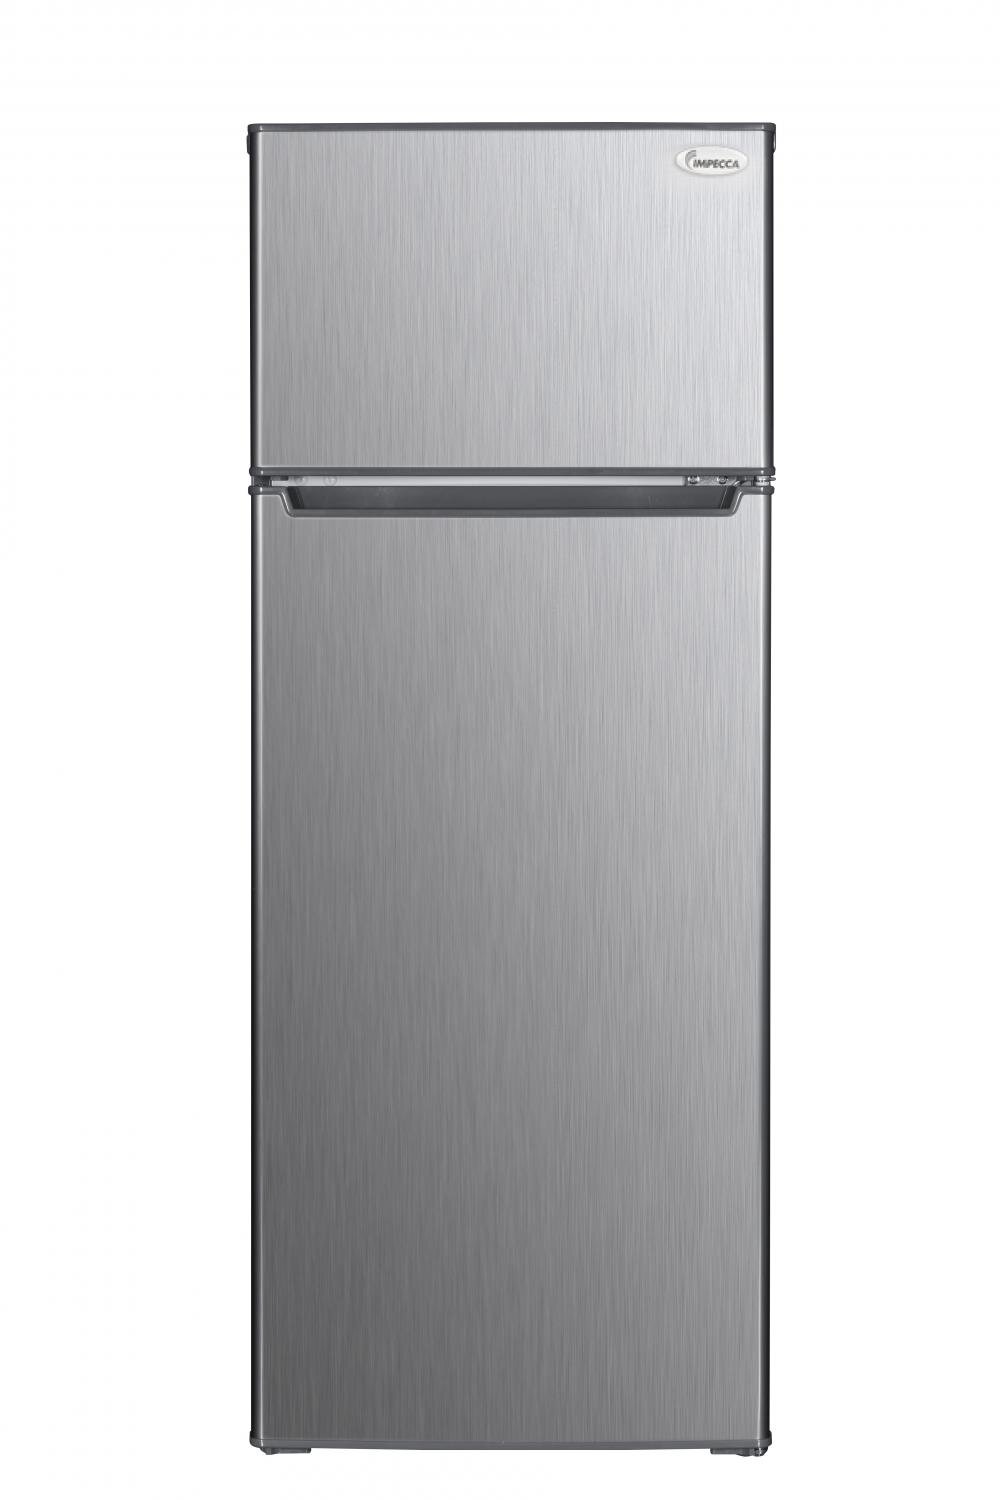 Impecca 22 Counter Depth Top Freezer 7 4 Cu Ft Refrigerator Reviews Wayfair